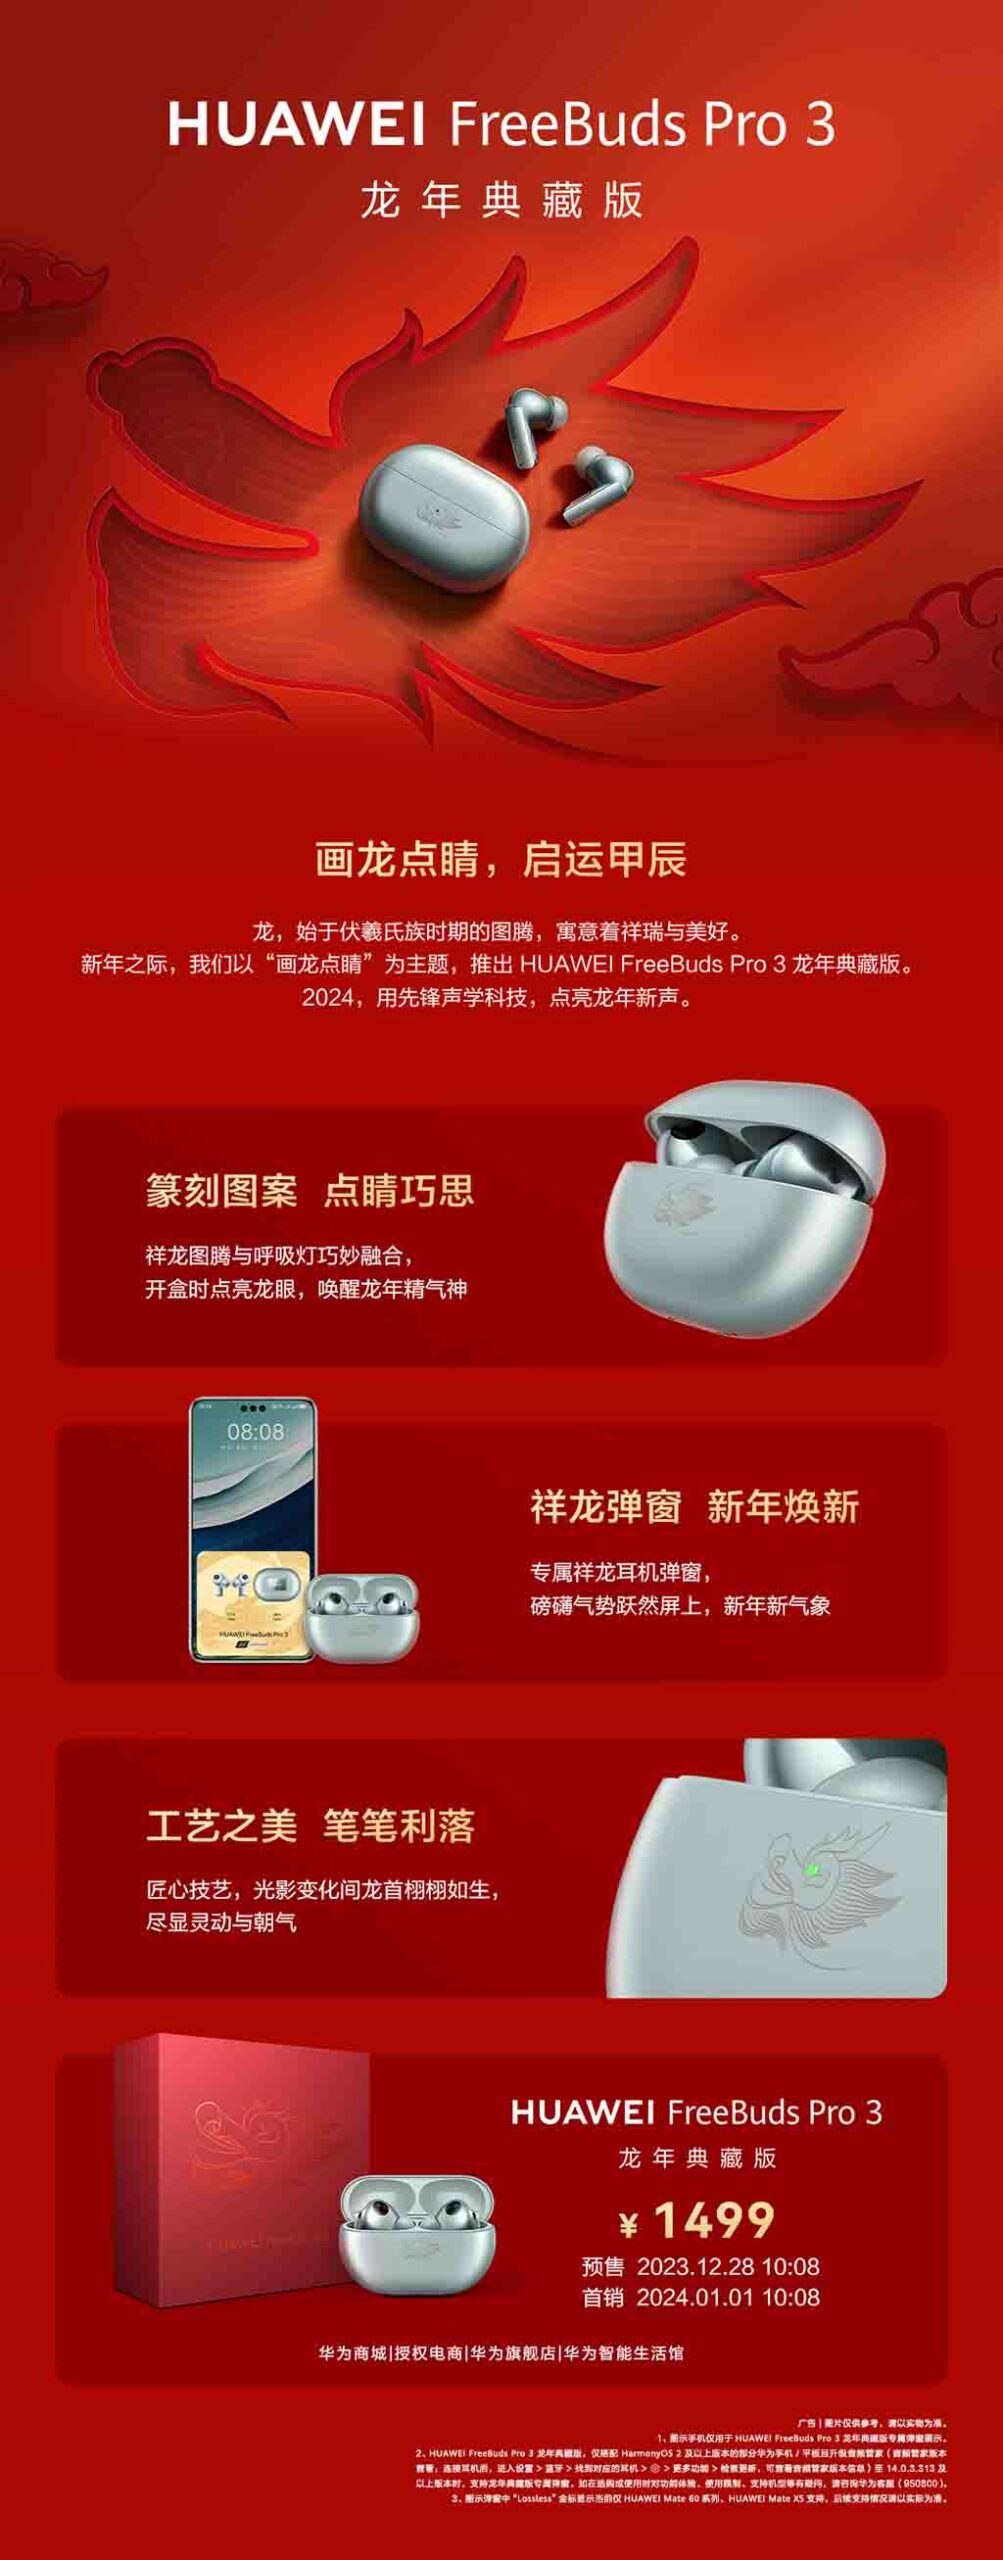 Huawei FreeBuds Pro 3 Dragon Edition